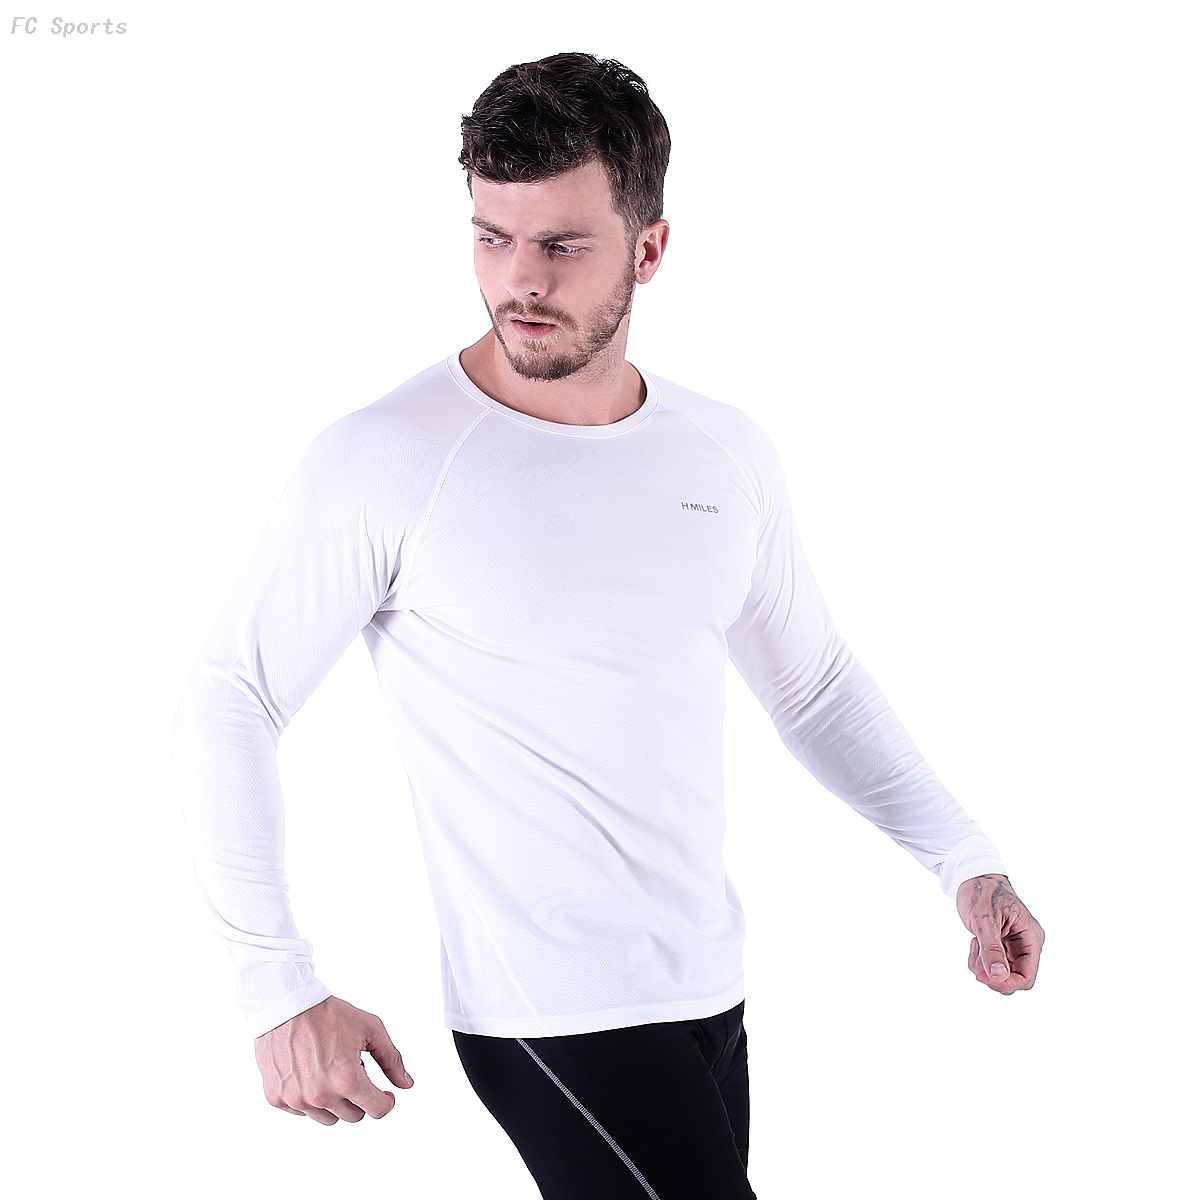 FC Sports Men Clothing Long Shirts Round Neck Tops Gym Yoga Train Wear Running Garments